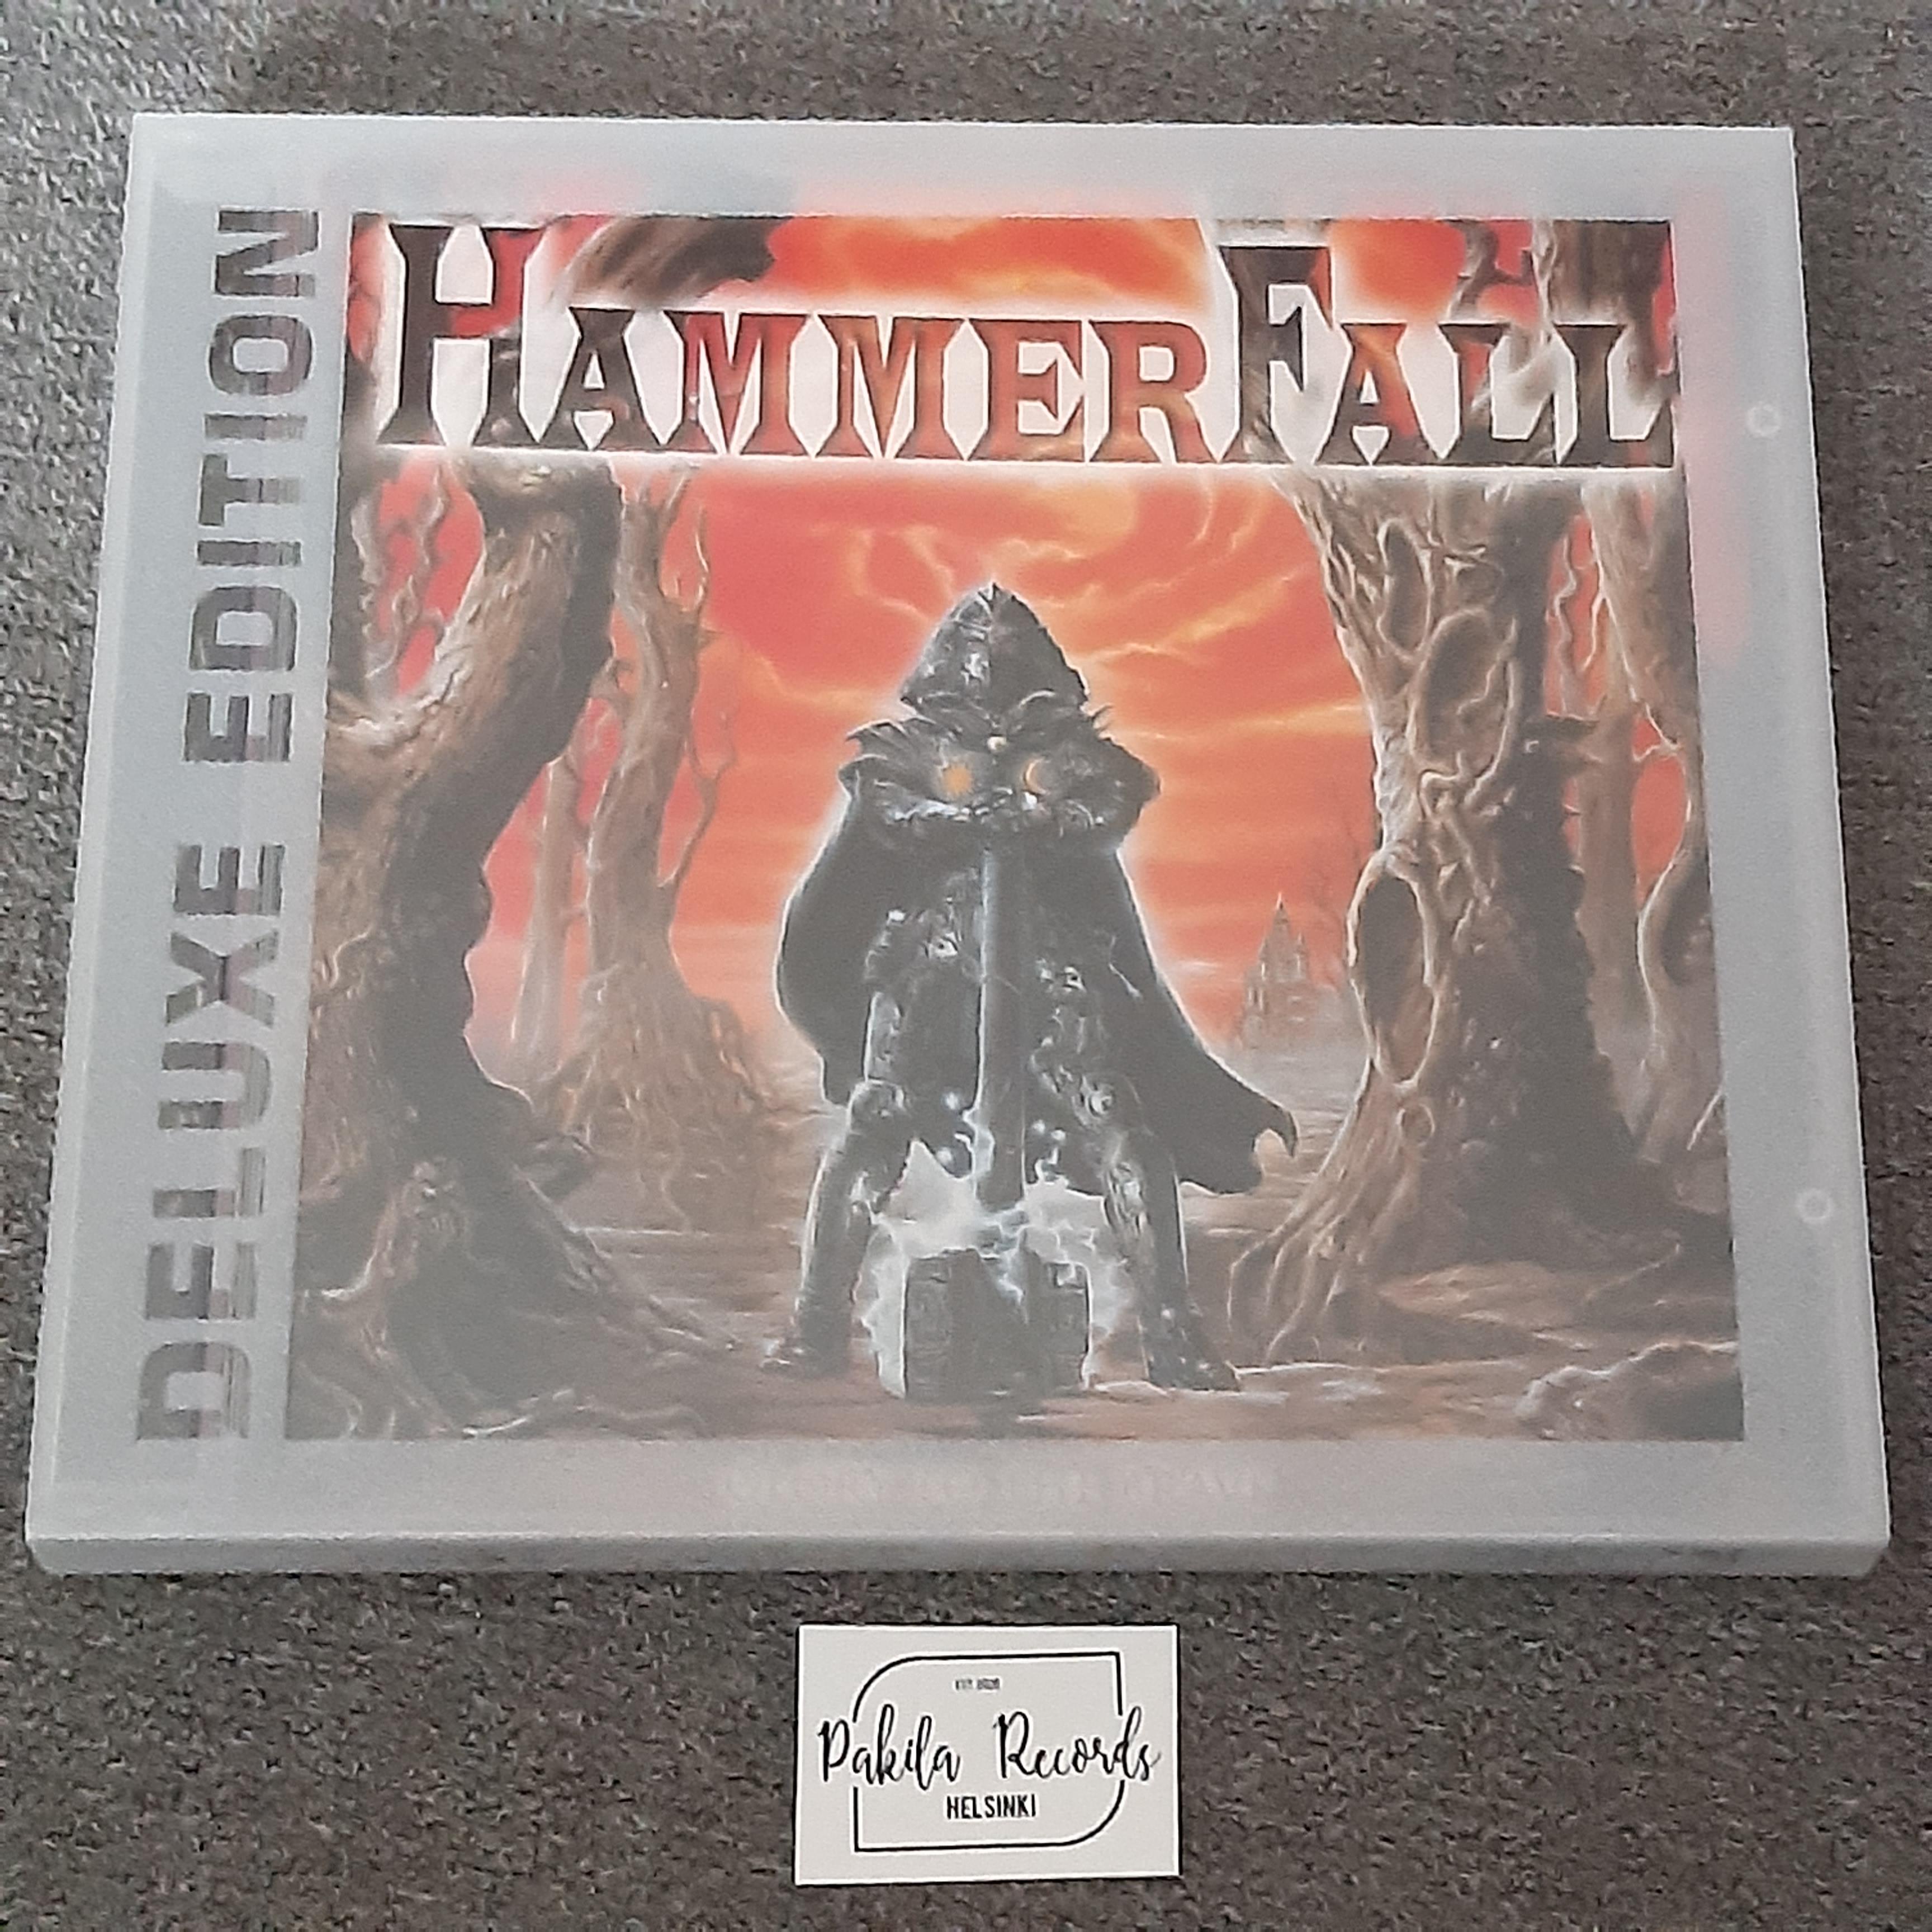 Hammerfall - Glory To The Brave - CD (käytetty)